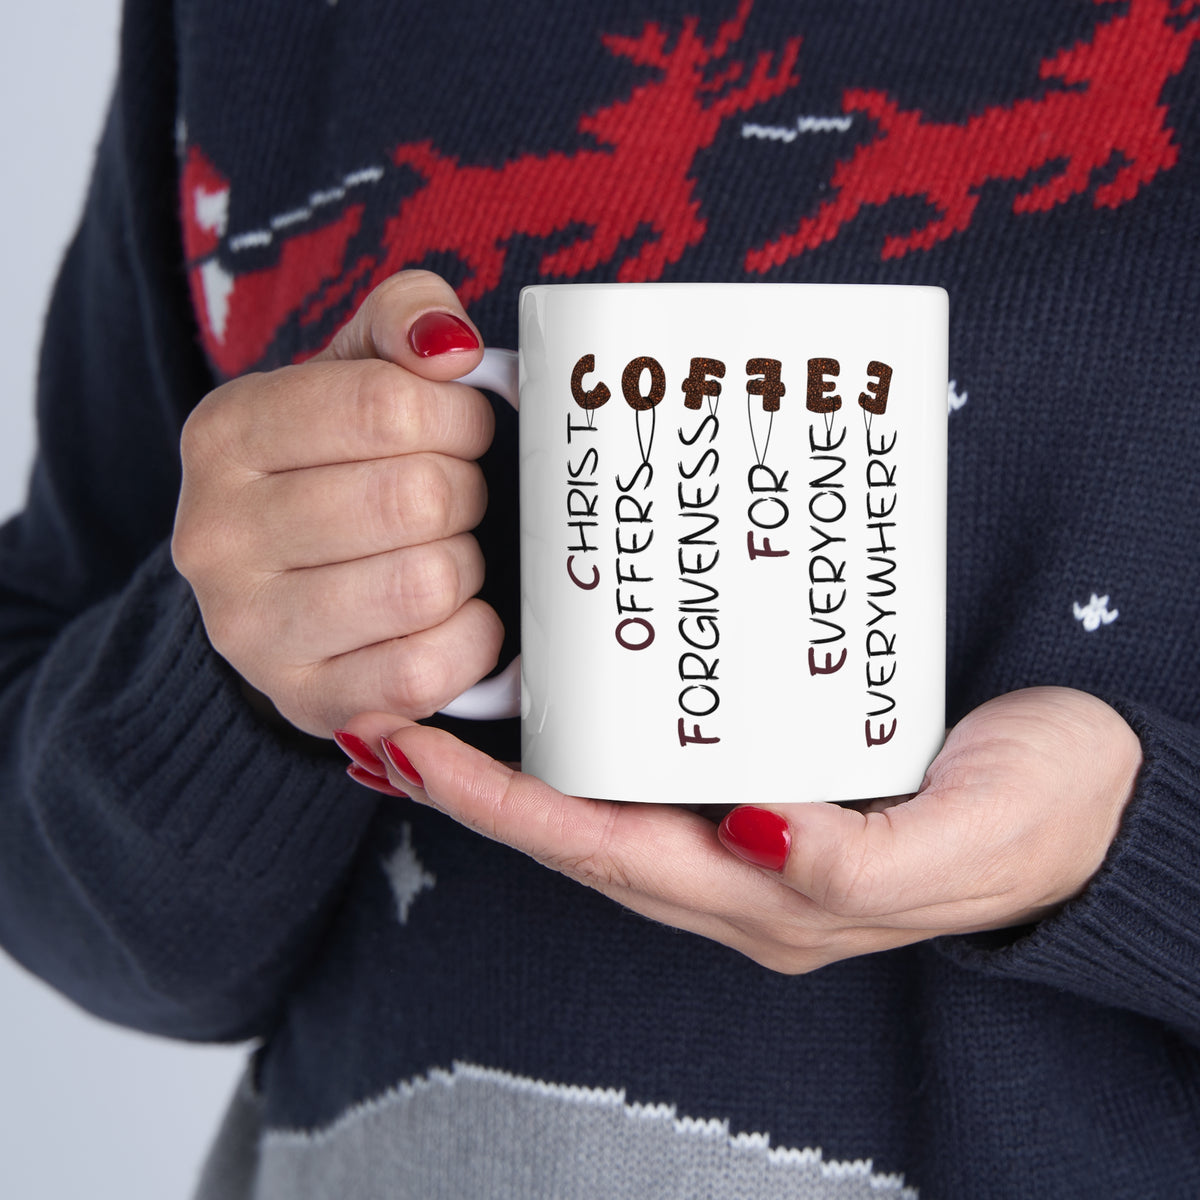 Coffee Lover Mugs / Coffee Addict Mugs